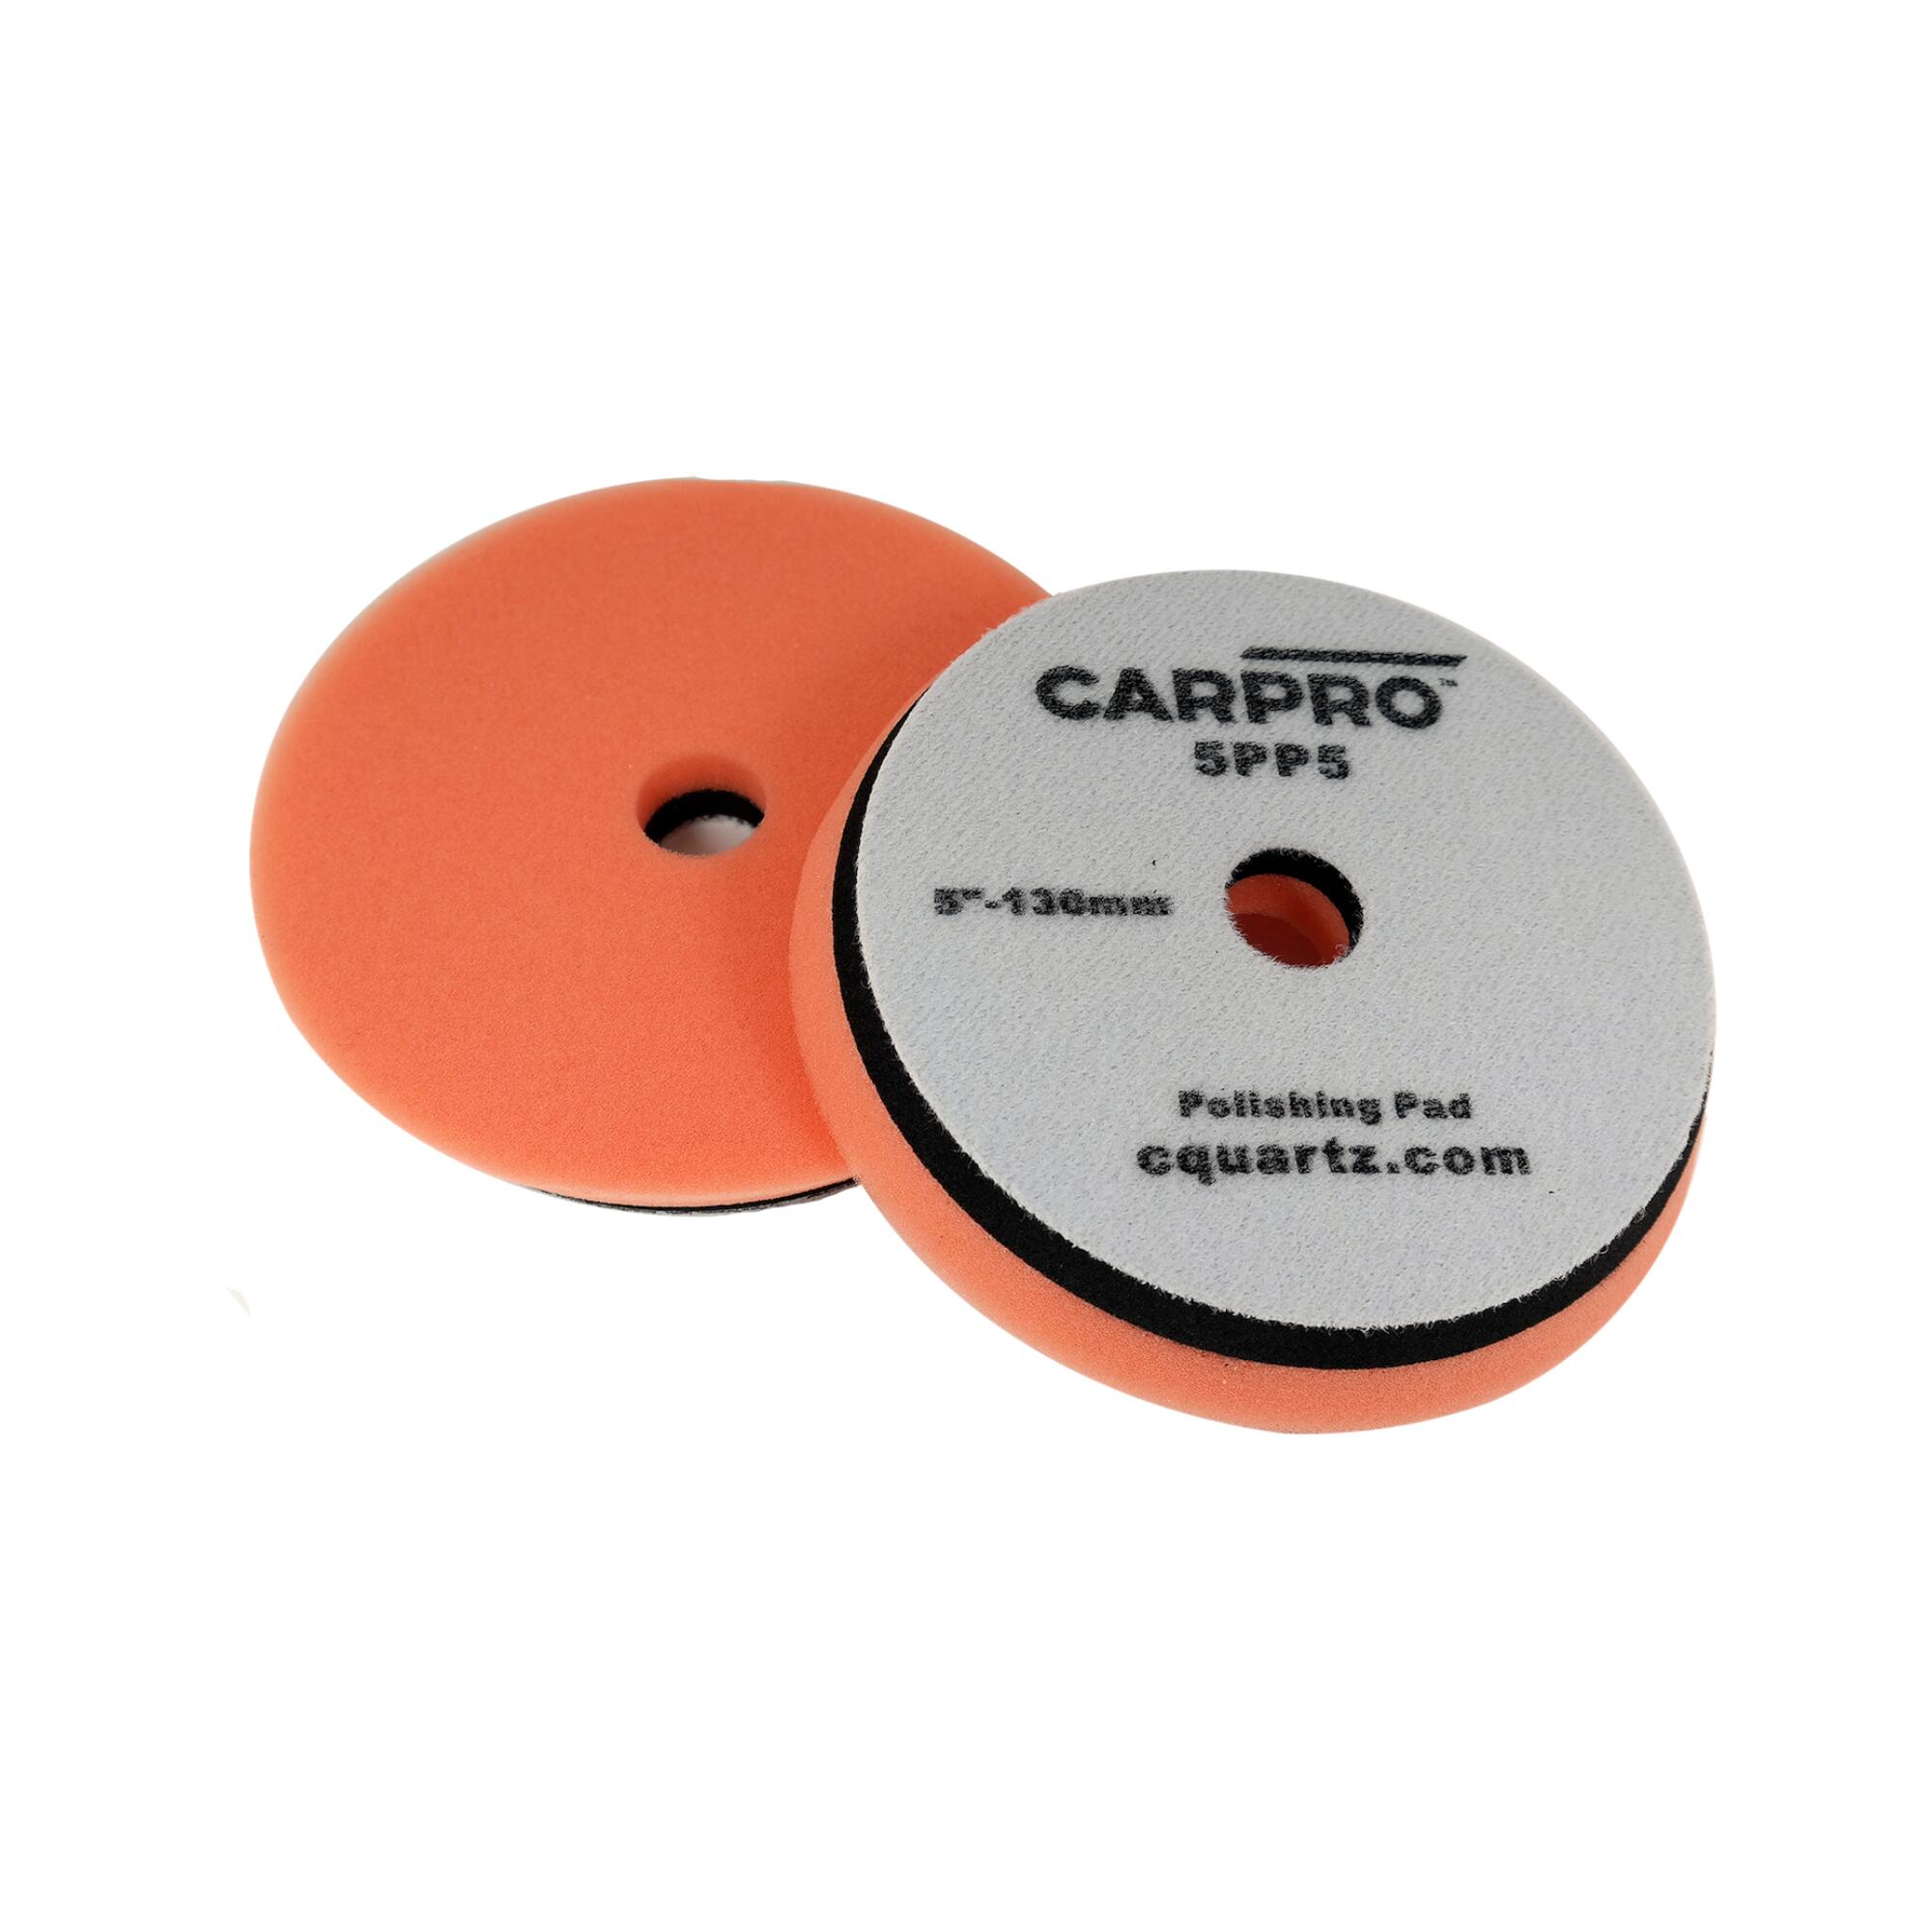 CARPRO Orange Pad オレンジポリッシングパッド 130mm/140mm 研磨 仕上げ ポリッシャー 滑らか 多用途